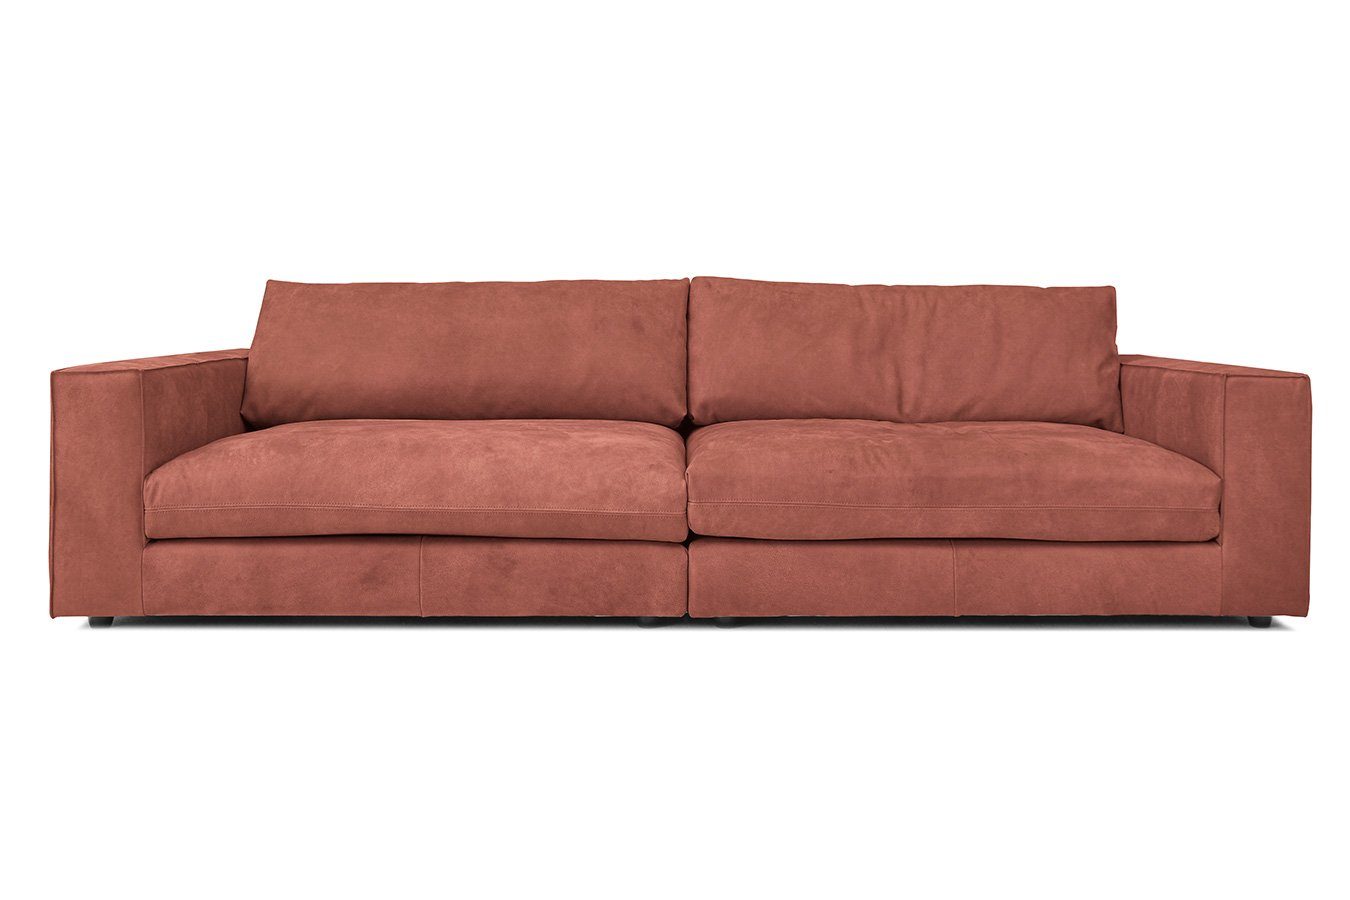 Leder burgundy daslagerhaus vintage Big-Sofa living Venezia 3,5-Sitzer